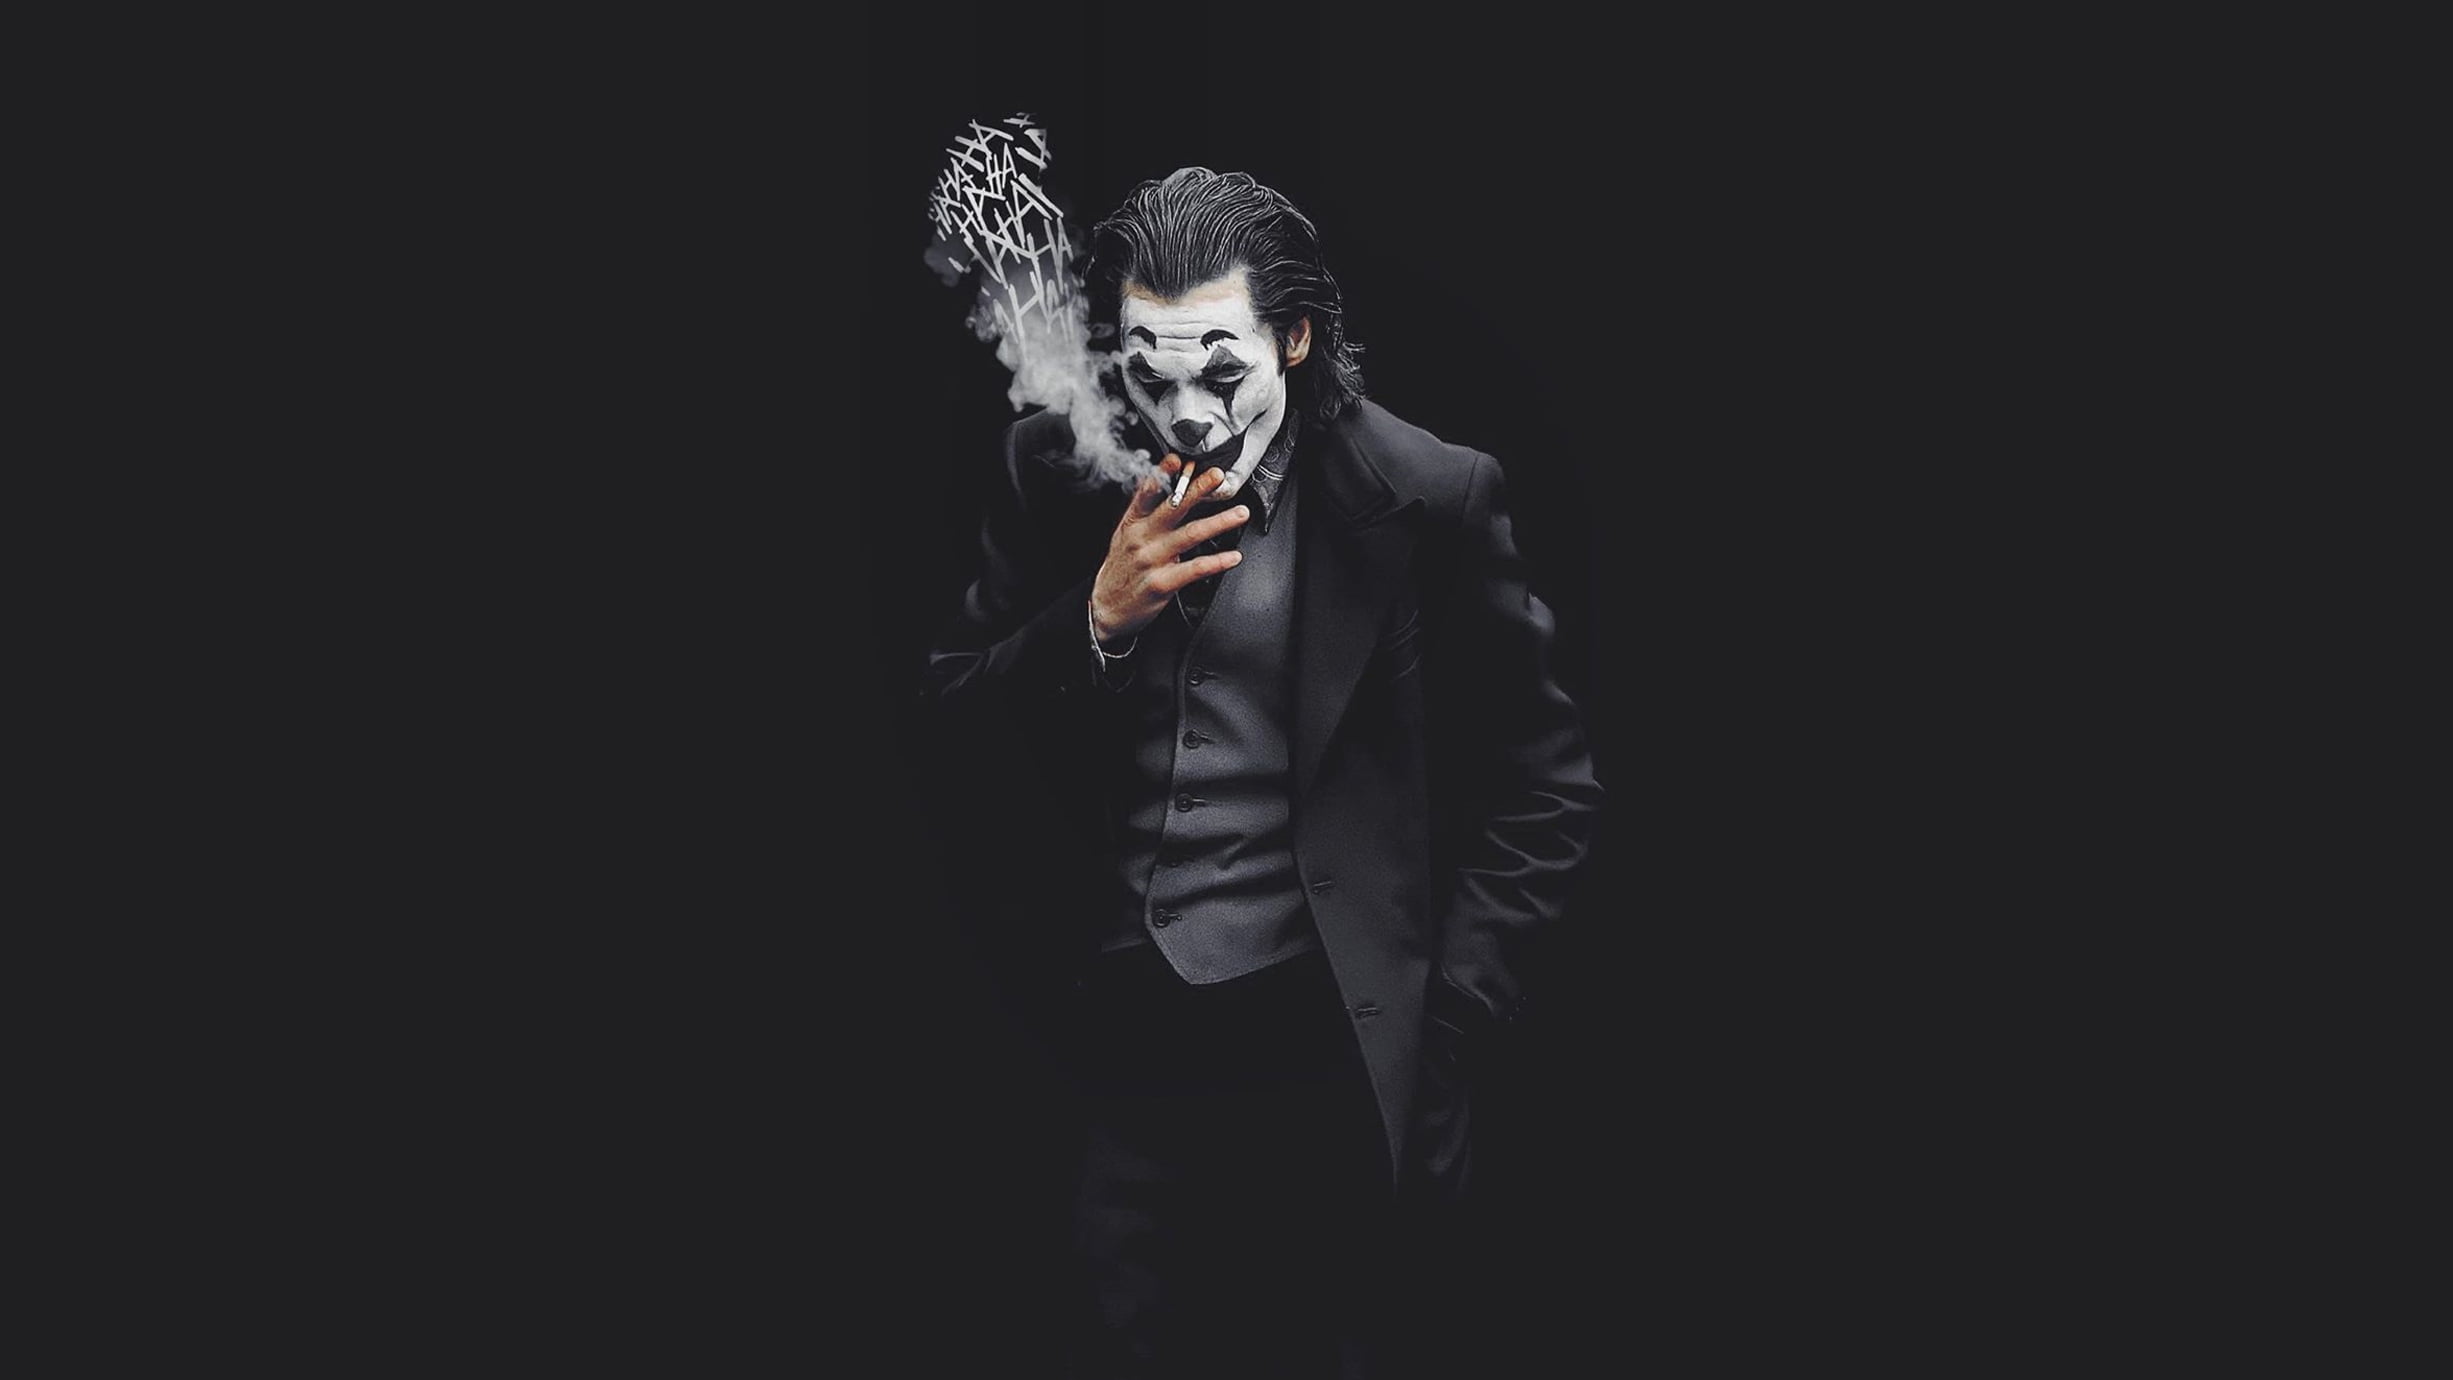 Joaquin Phoenix Joker Poster, joker, 2019, joaquin phoenix, dc comics